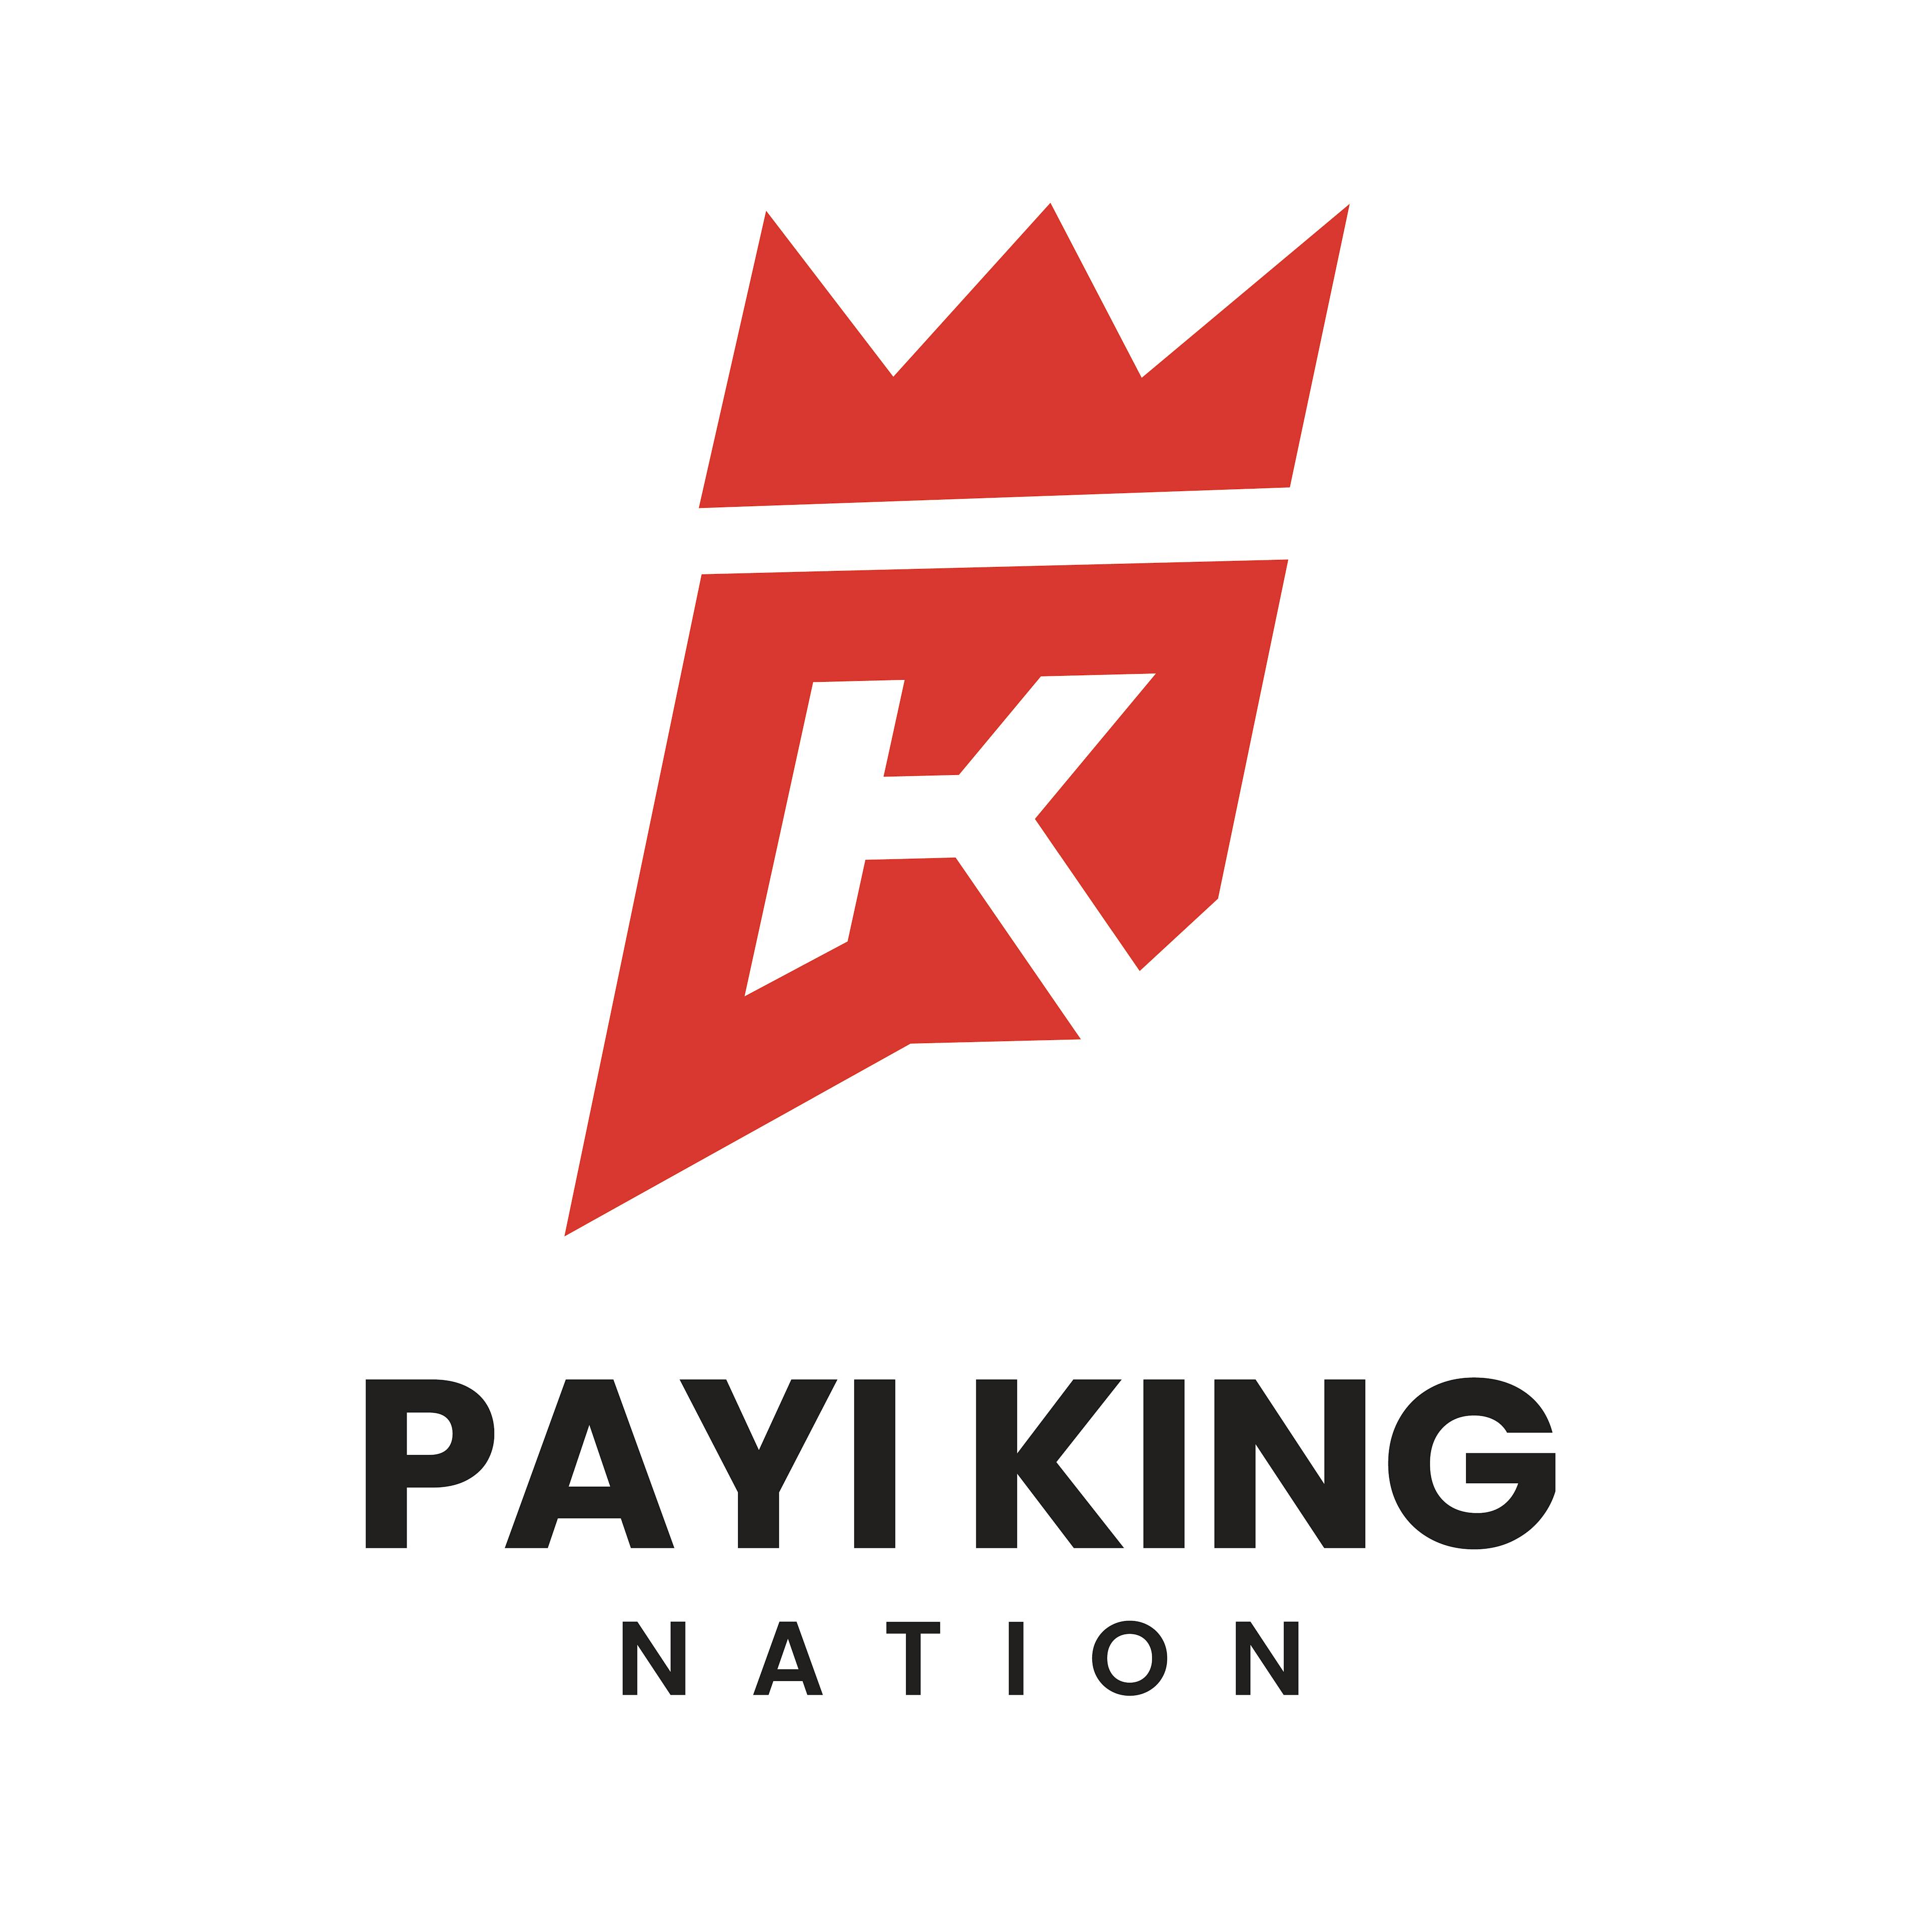 Pay King Nation Brand identity